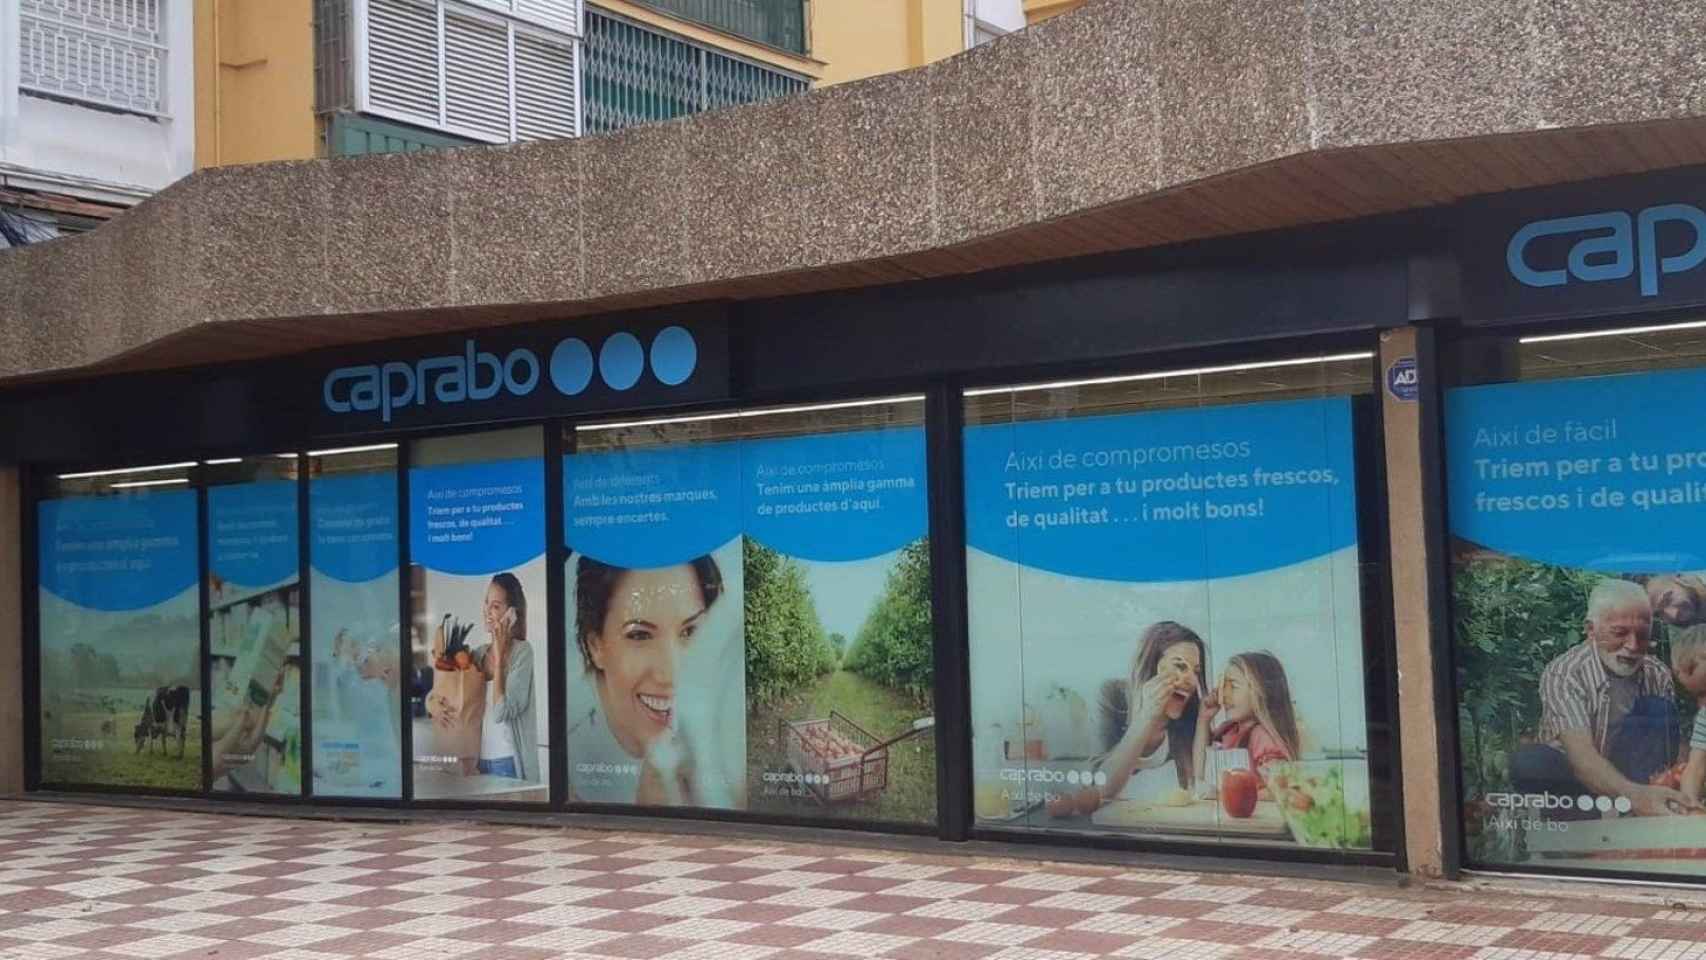 Caprabo abre un nuevo supermercado en Cerdanyola / CAPRABO